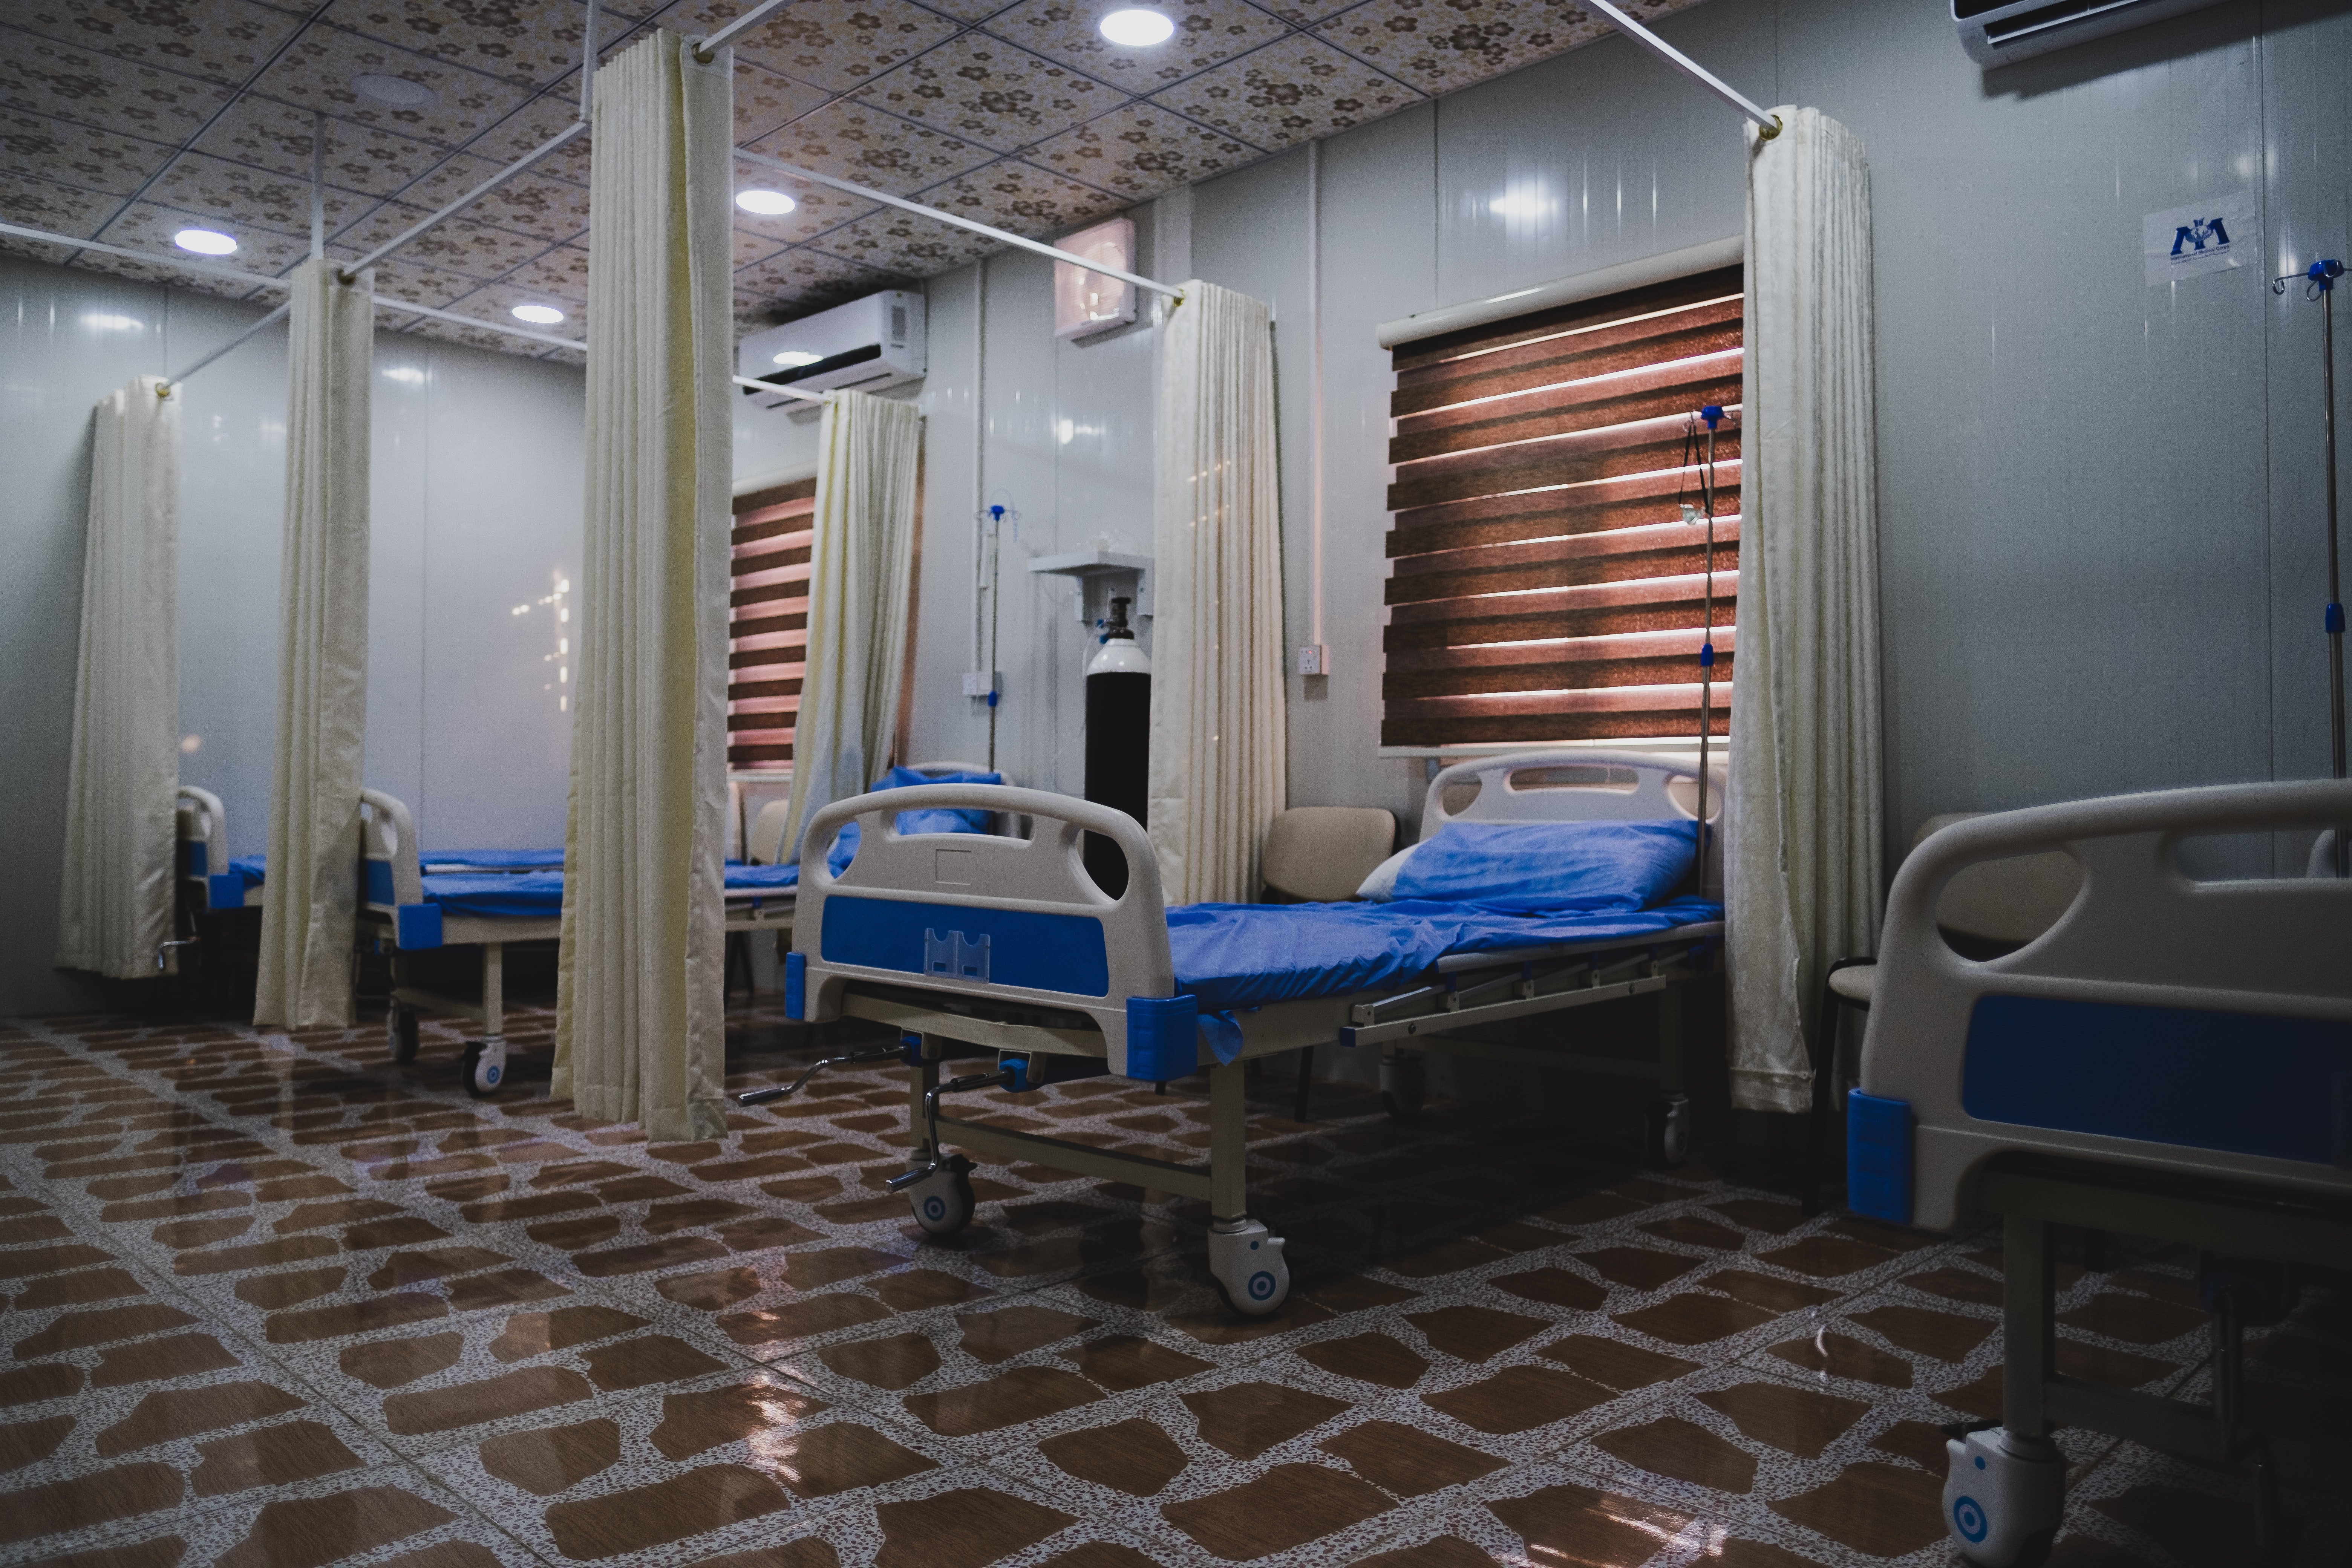 Row of empty hospital beds